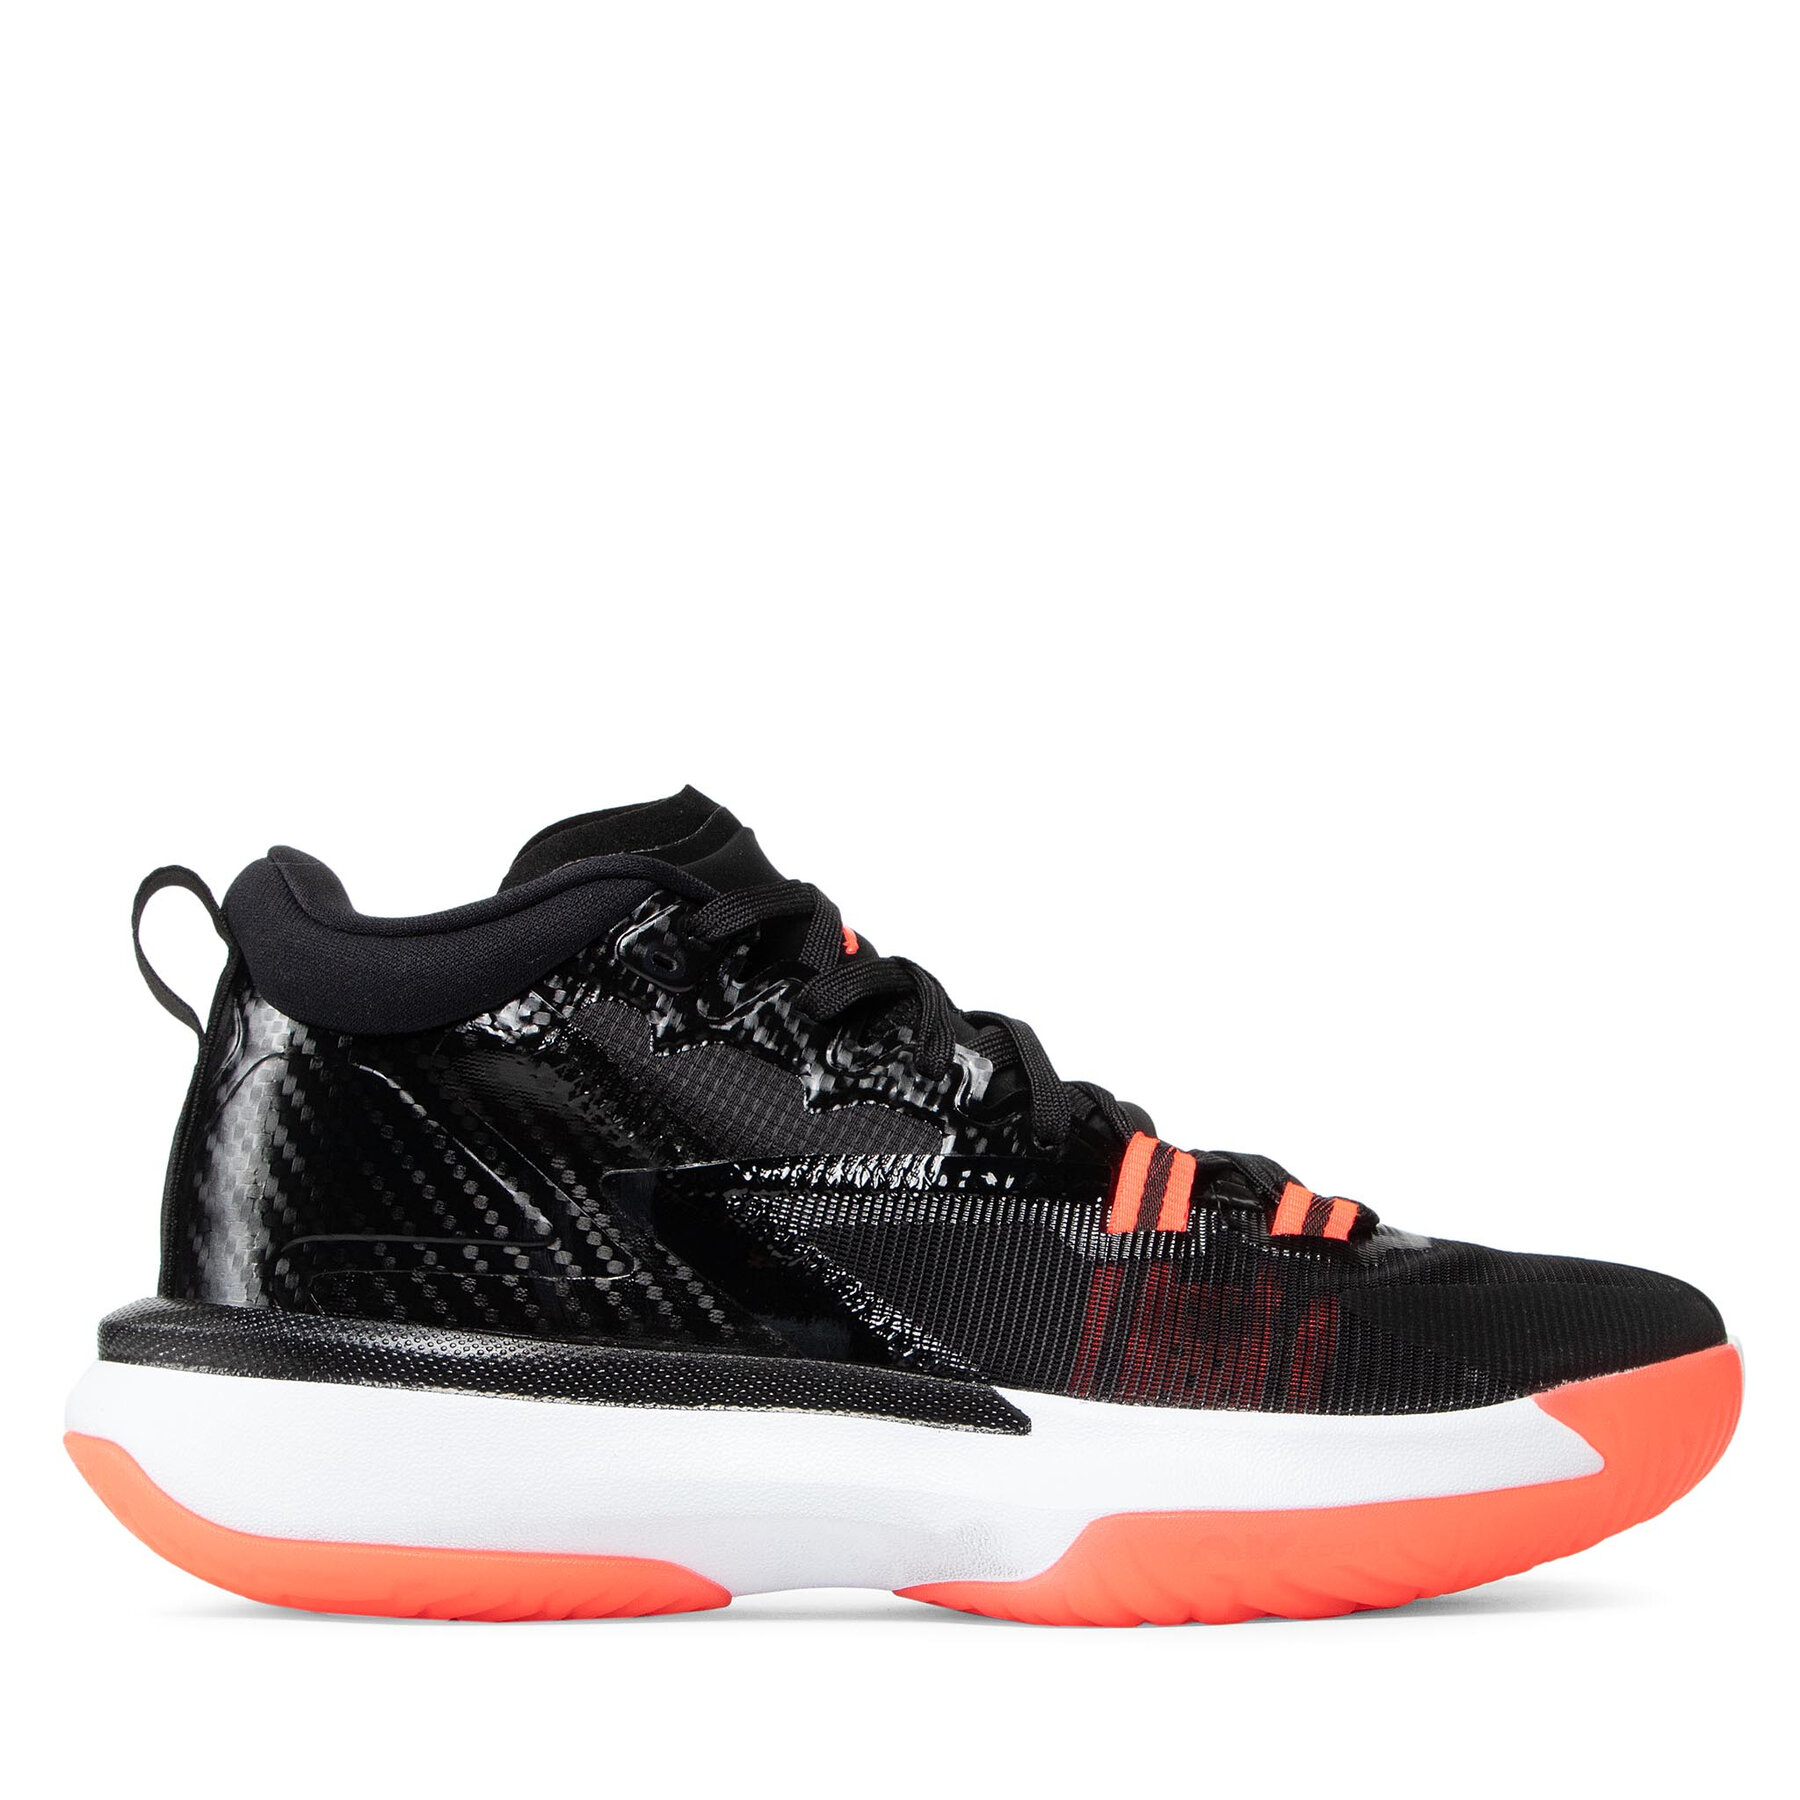 Batai Nike Jordan Zion 1 DA3130 006 Black/Bright Crimson/White